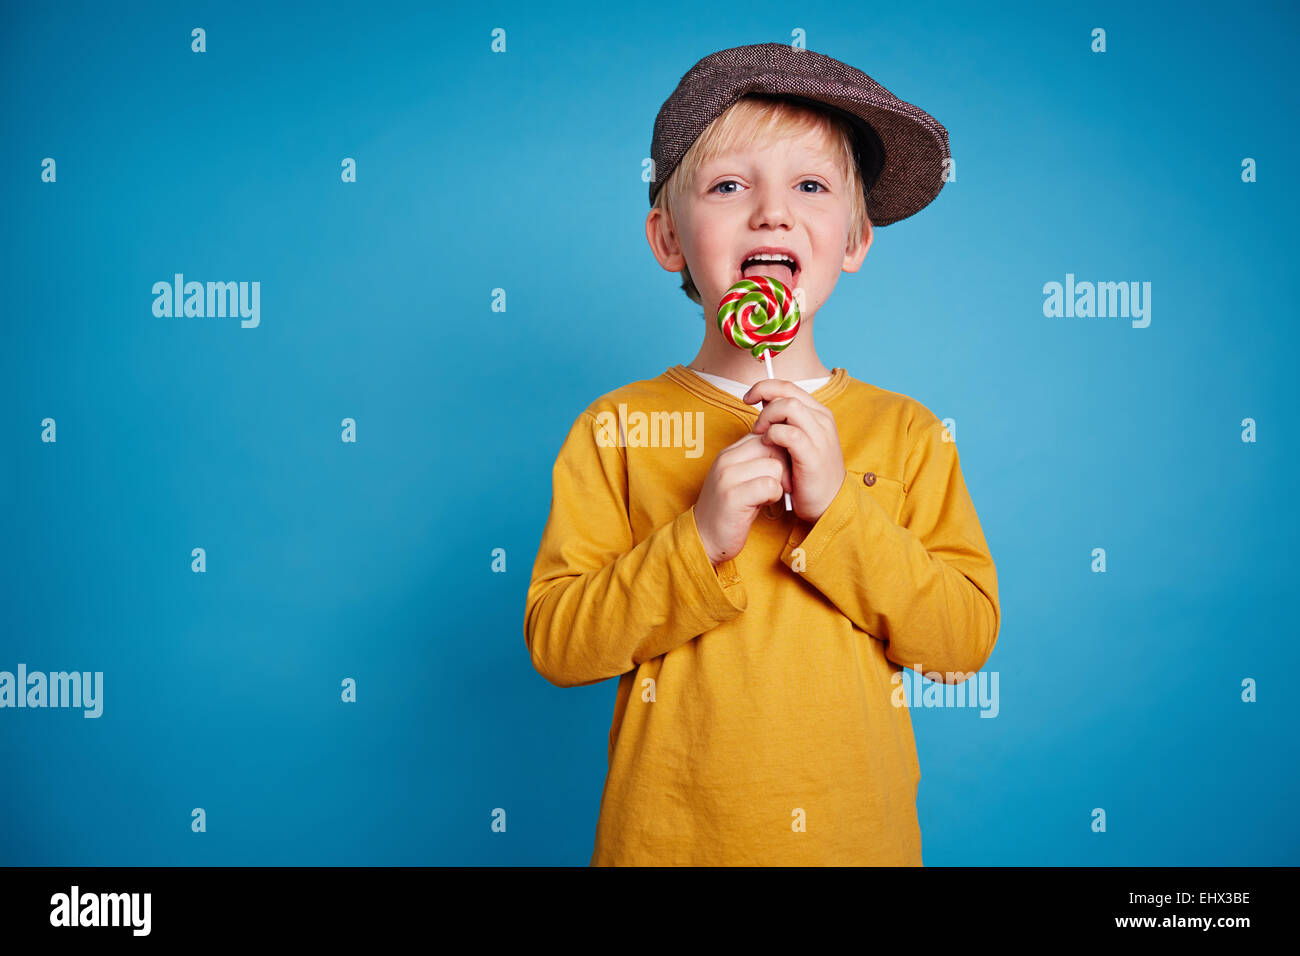 Boy licking lollipop Stock Photo